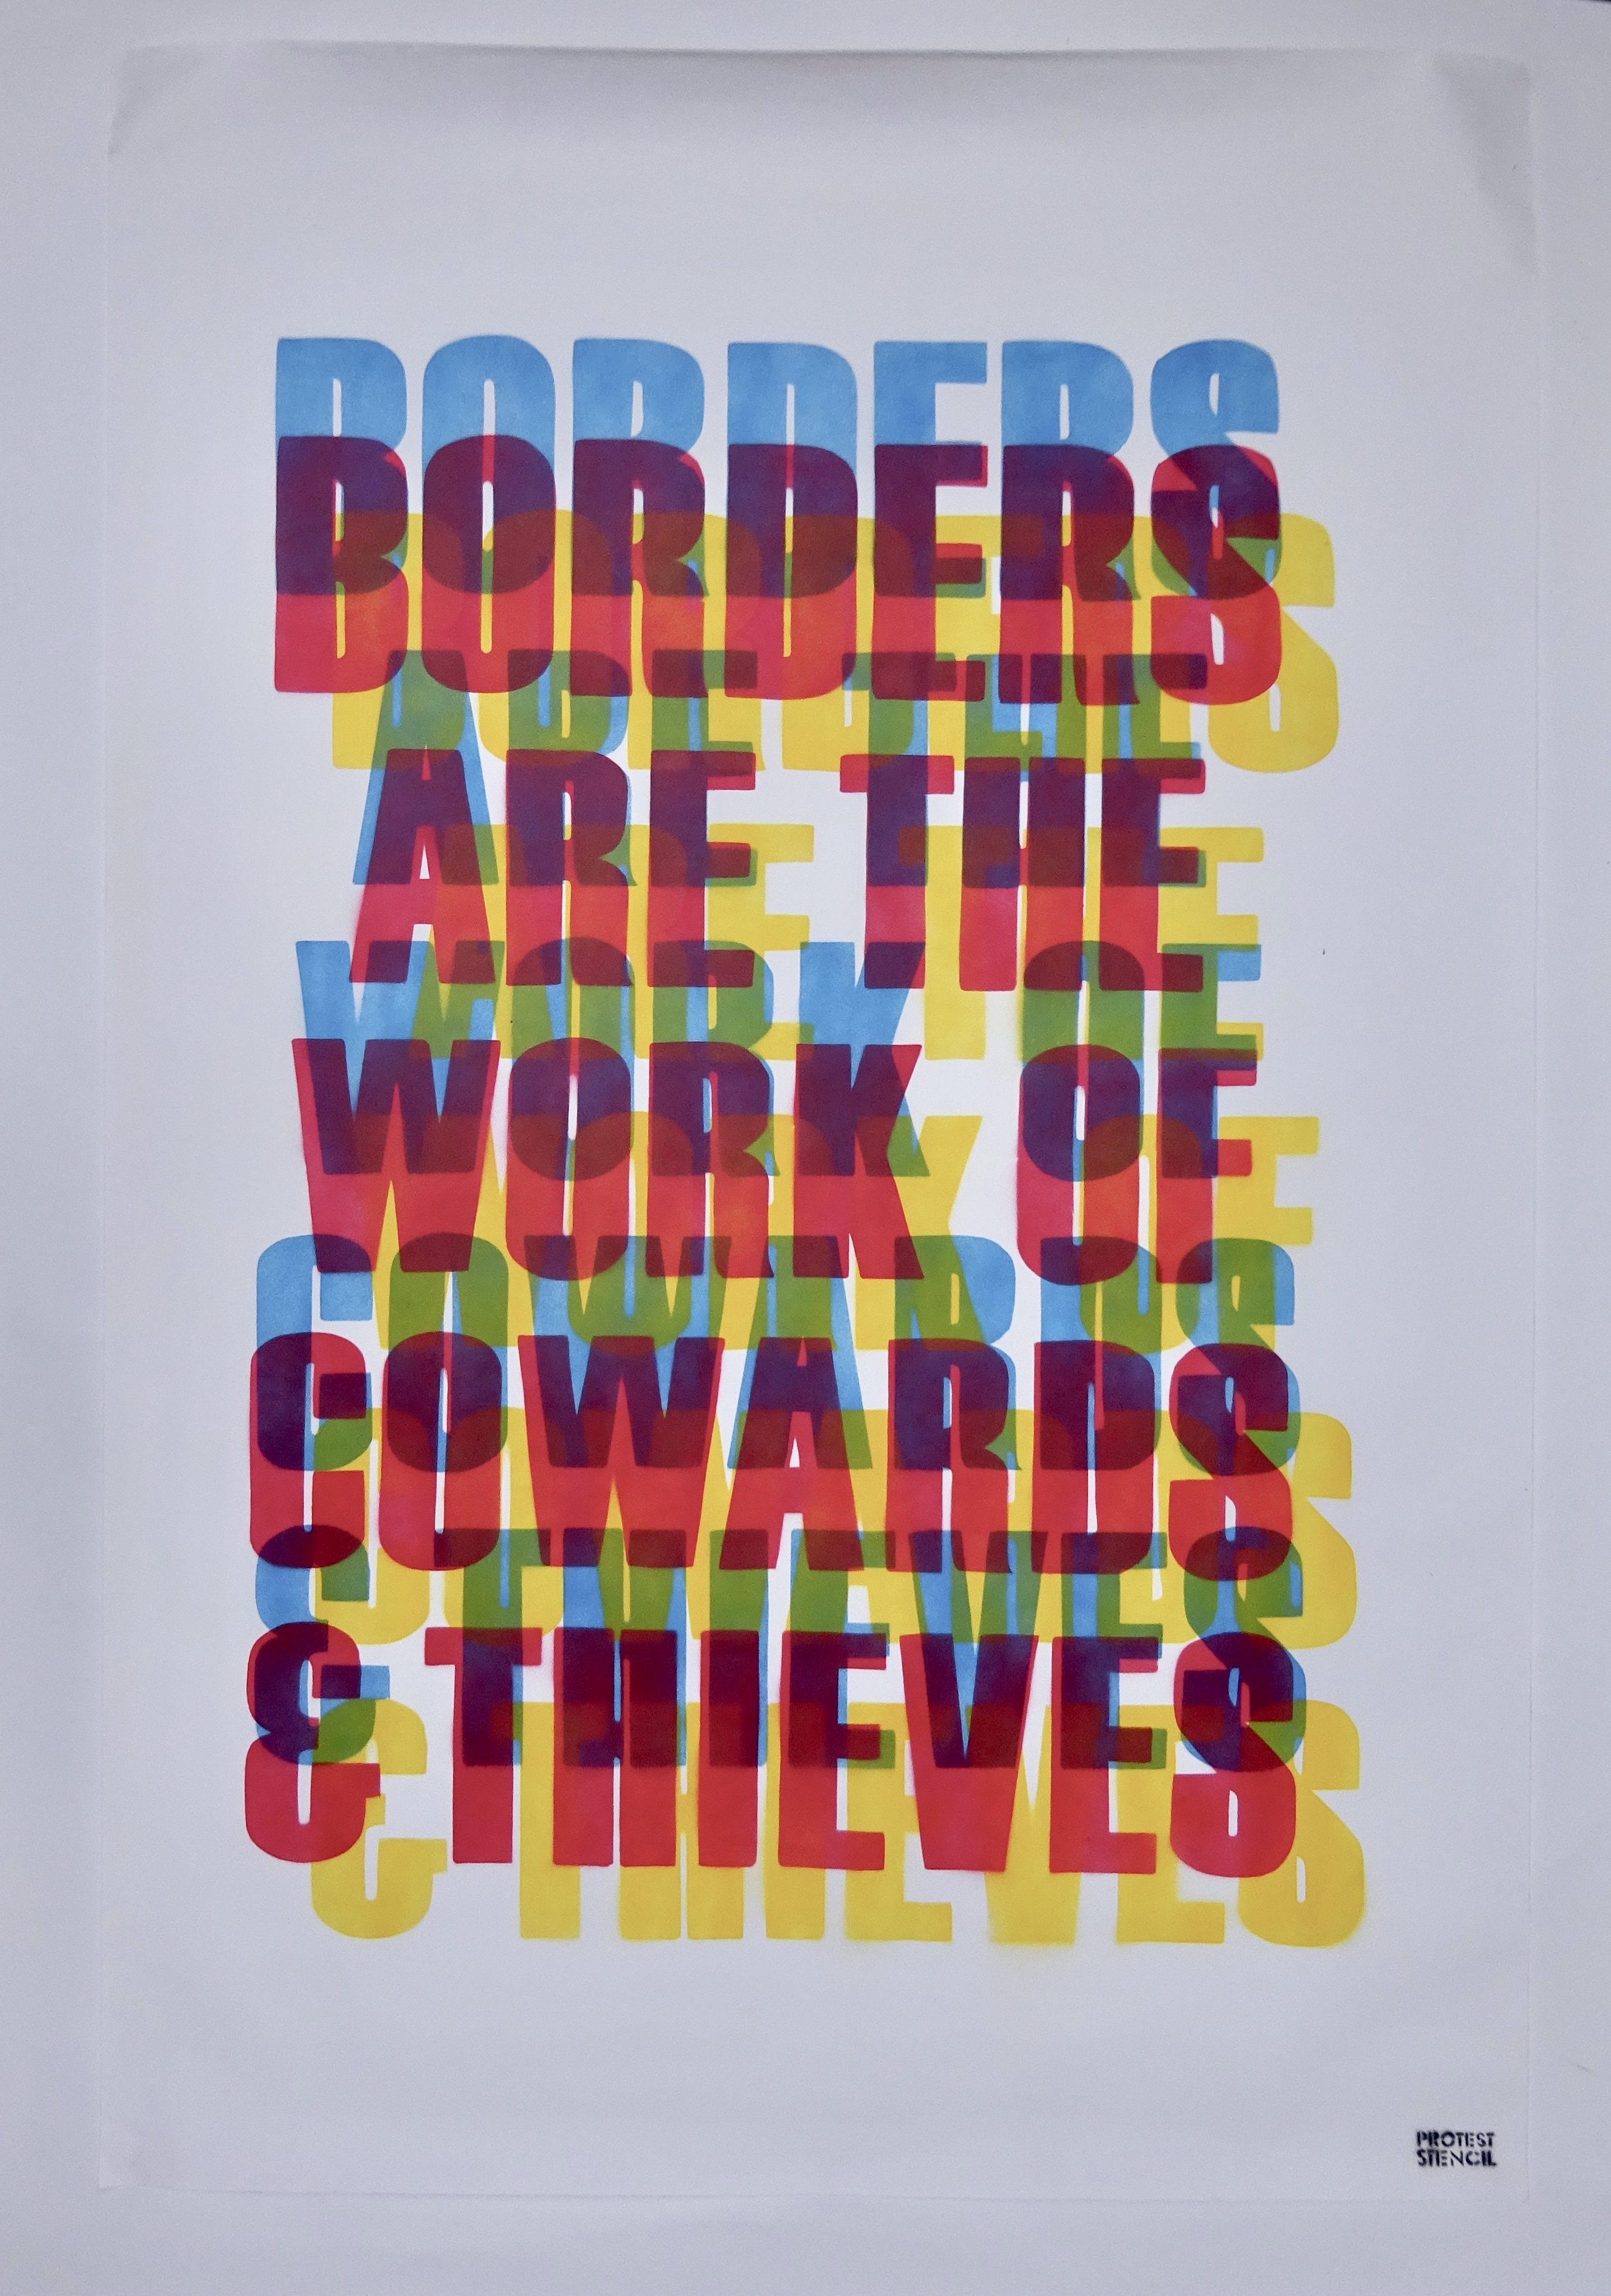 Borders, Cowards, Thieves (2022)